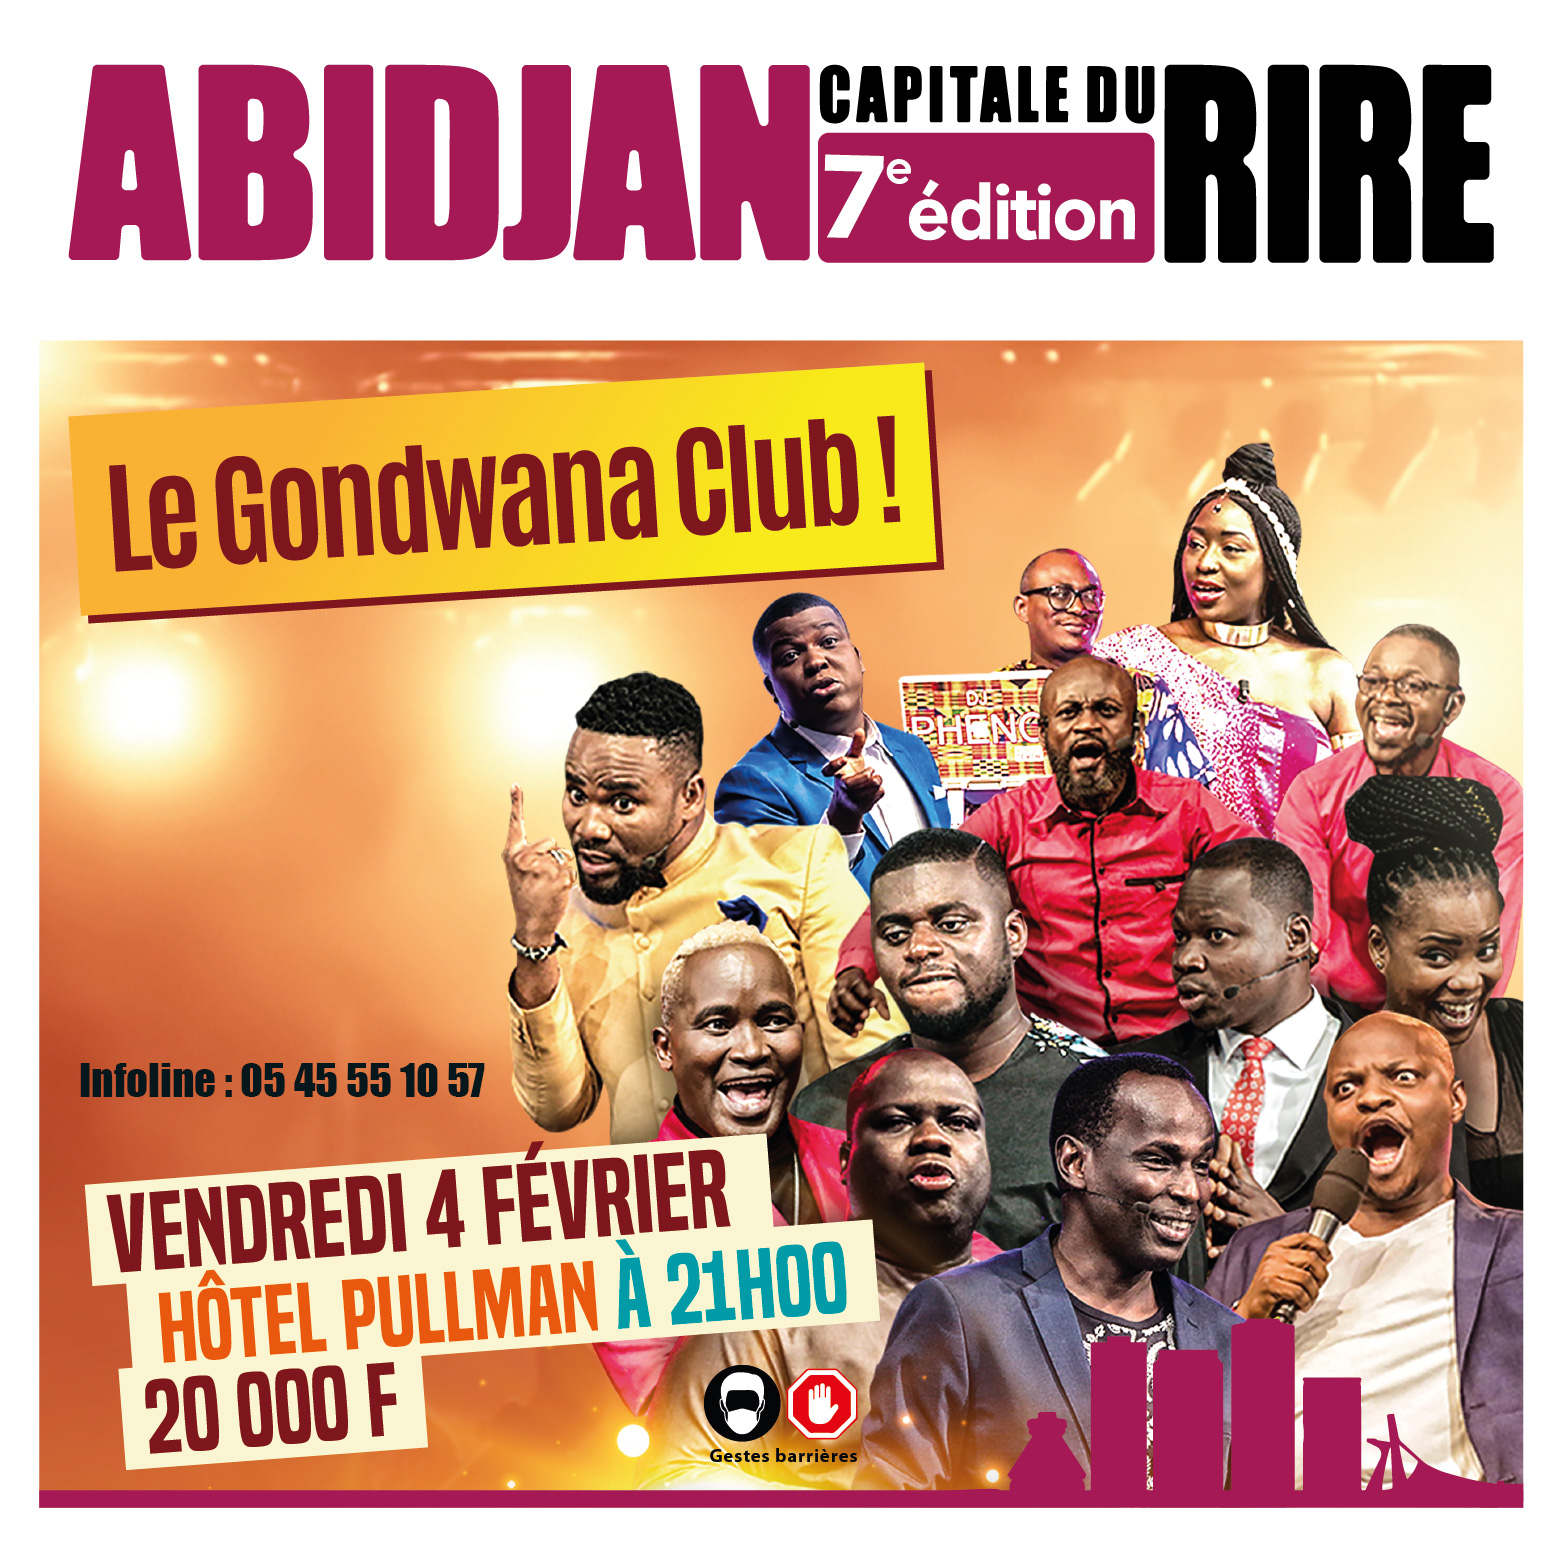 7e Edition Abidjan Capital du Rire : Le Gondwana Club